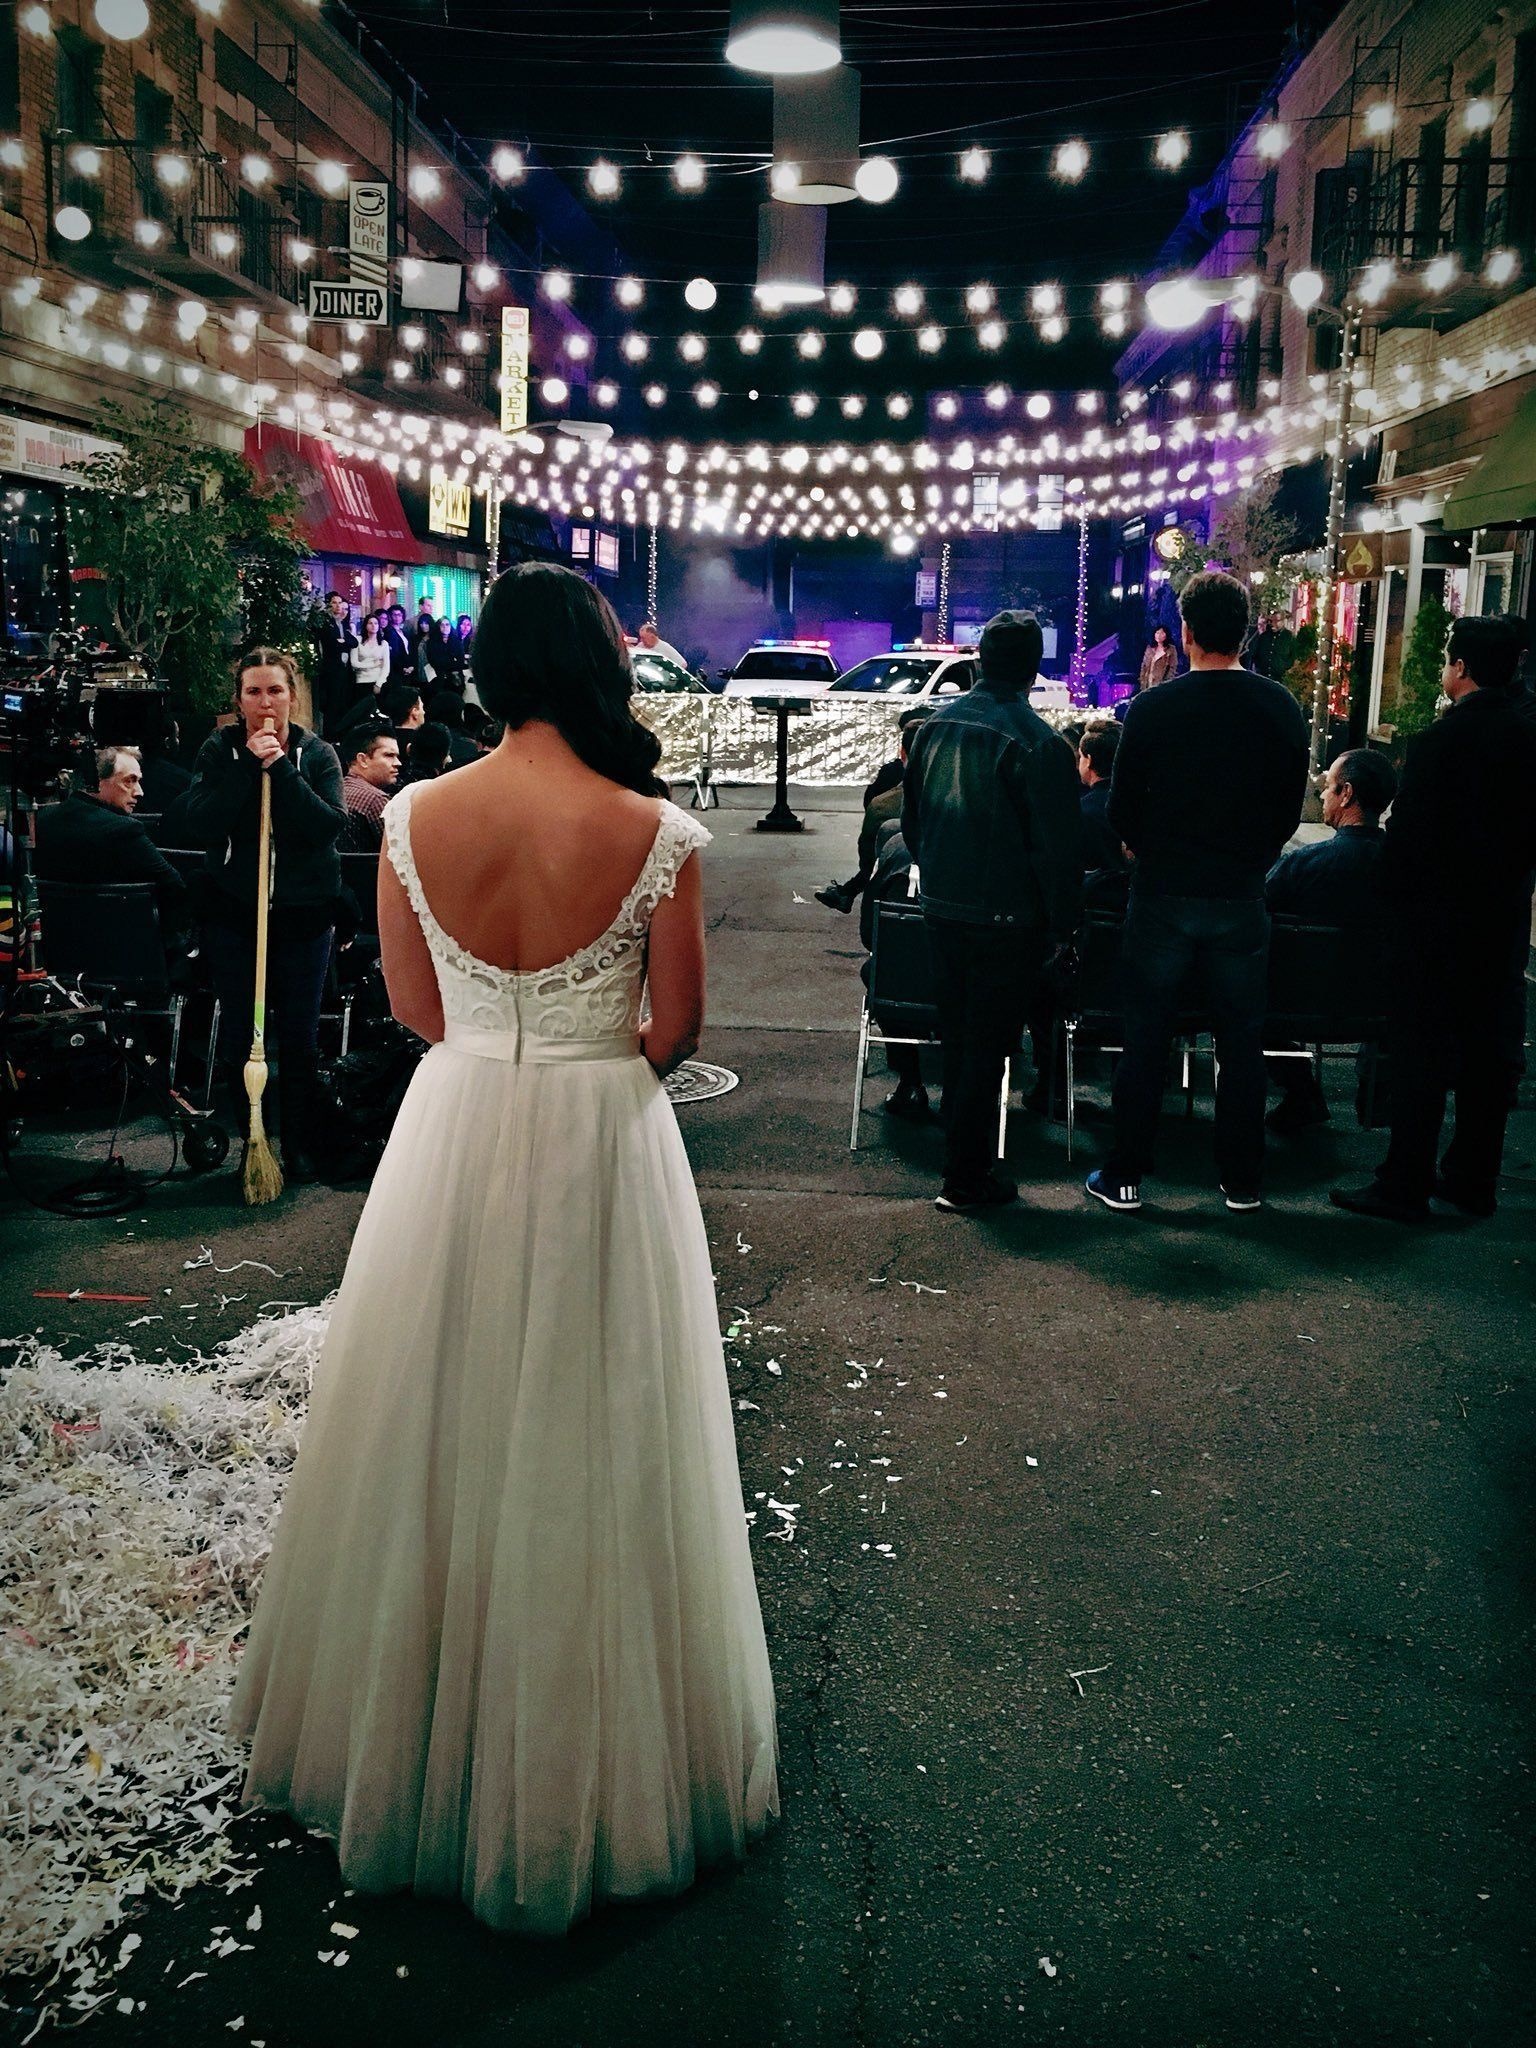 Brooklyn Nine-Nine (TV Series): Jake and Amy, Getting married, Wedding, Season 5 Episode 22. 1540x2050 HD Wallpaper.